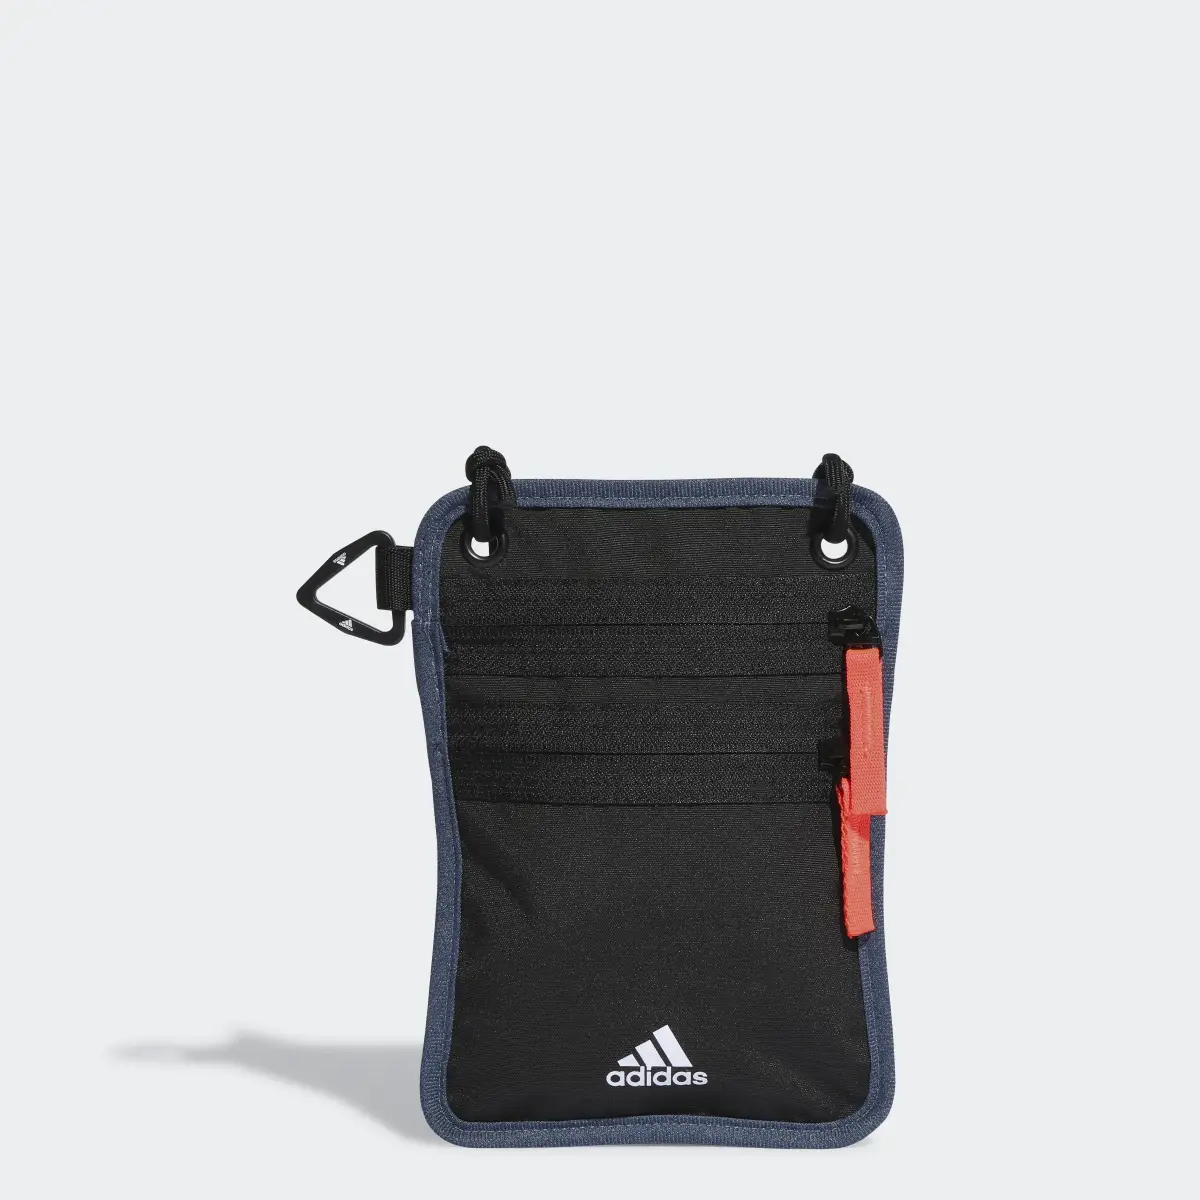 Adidas City Xplorer Mini-Bag. 1